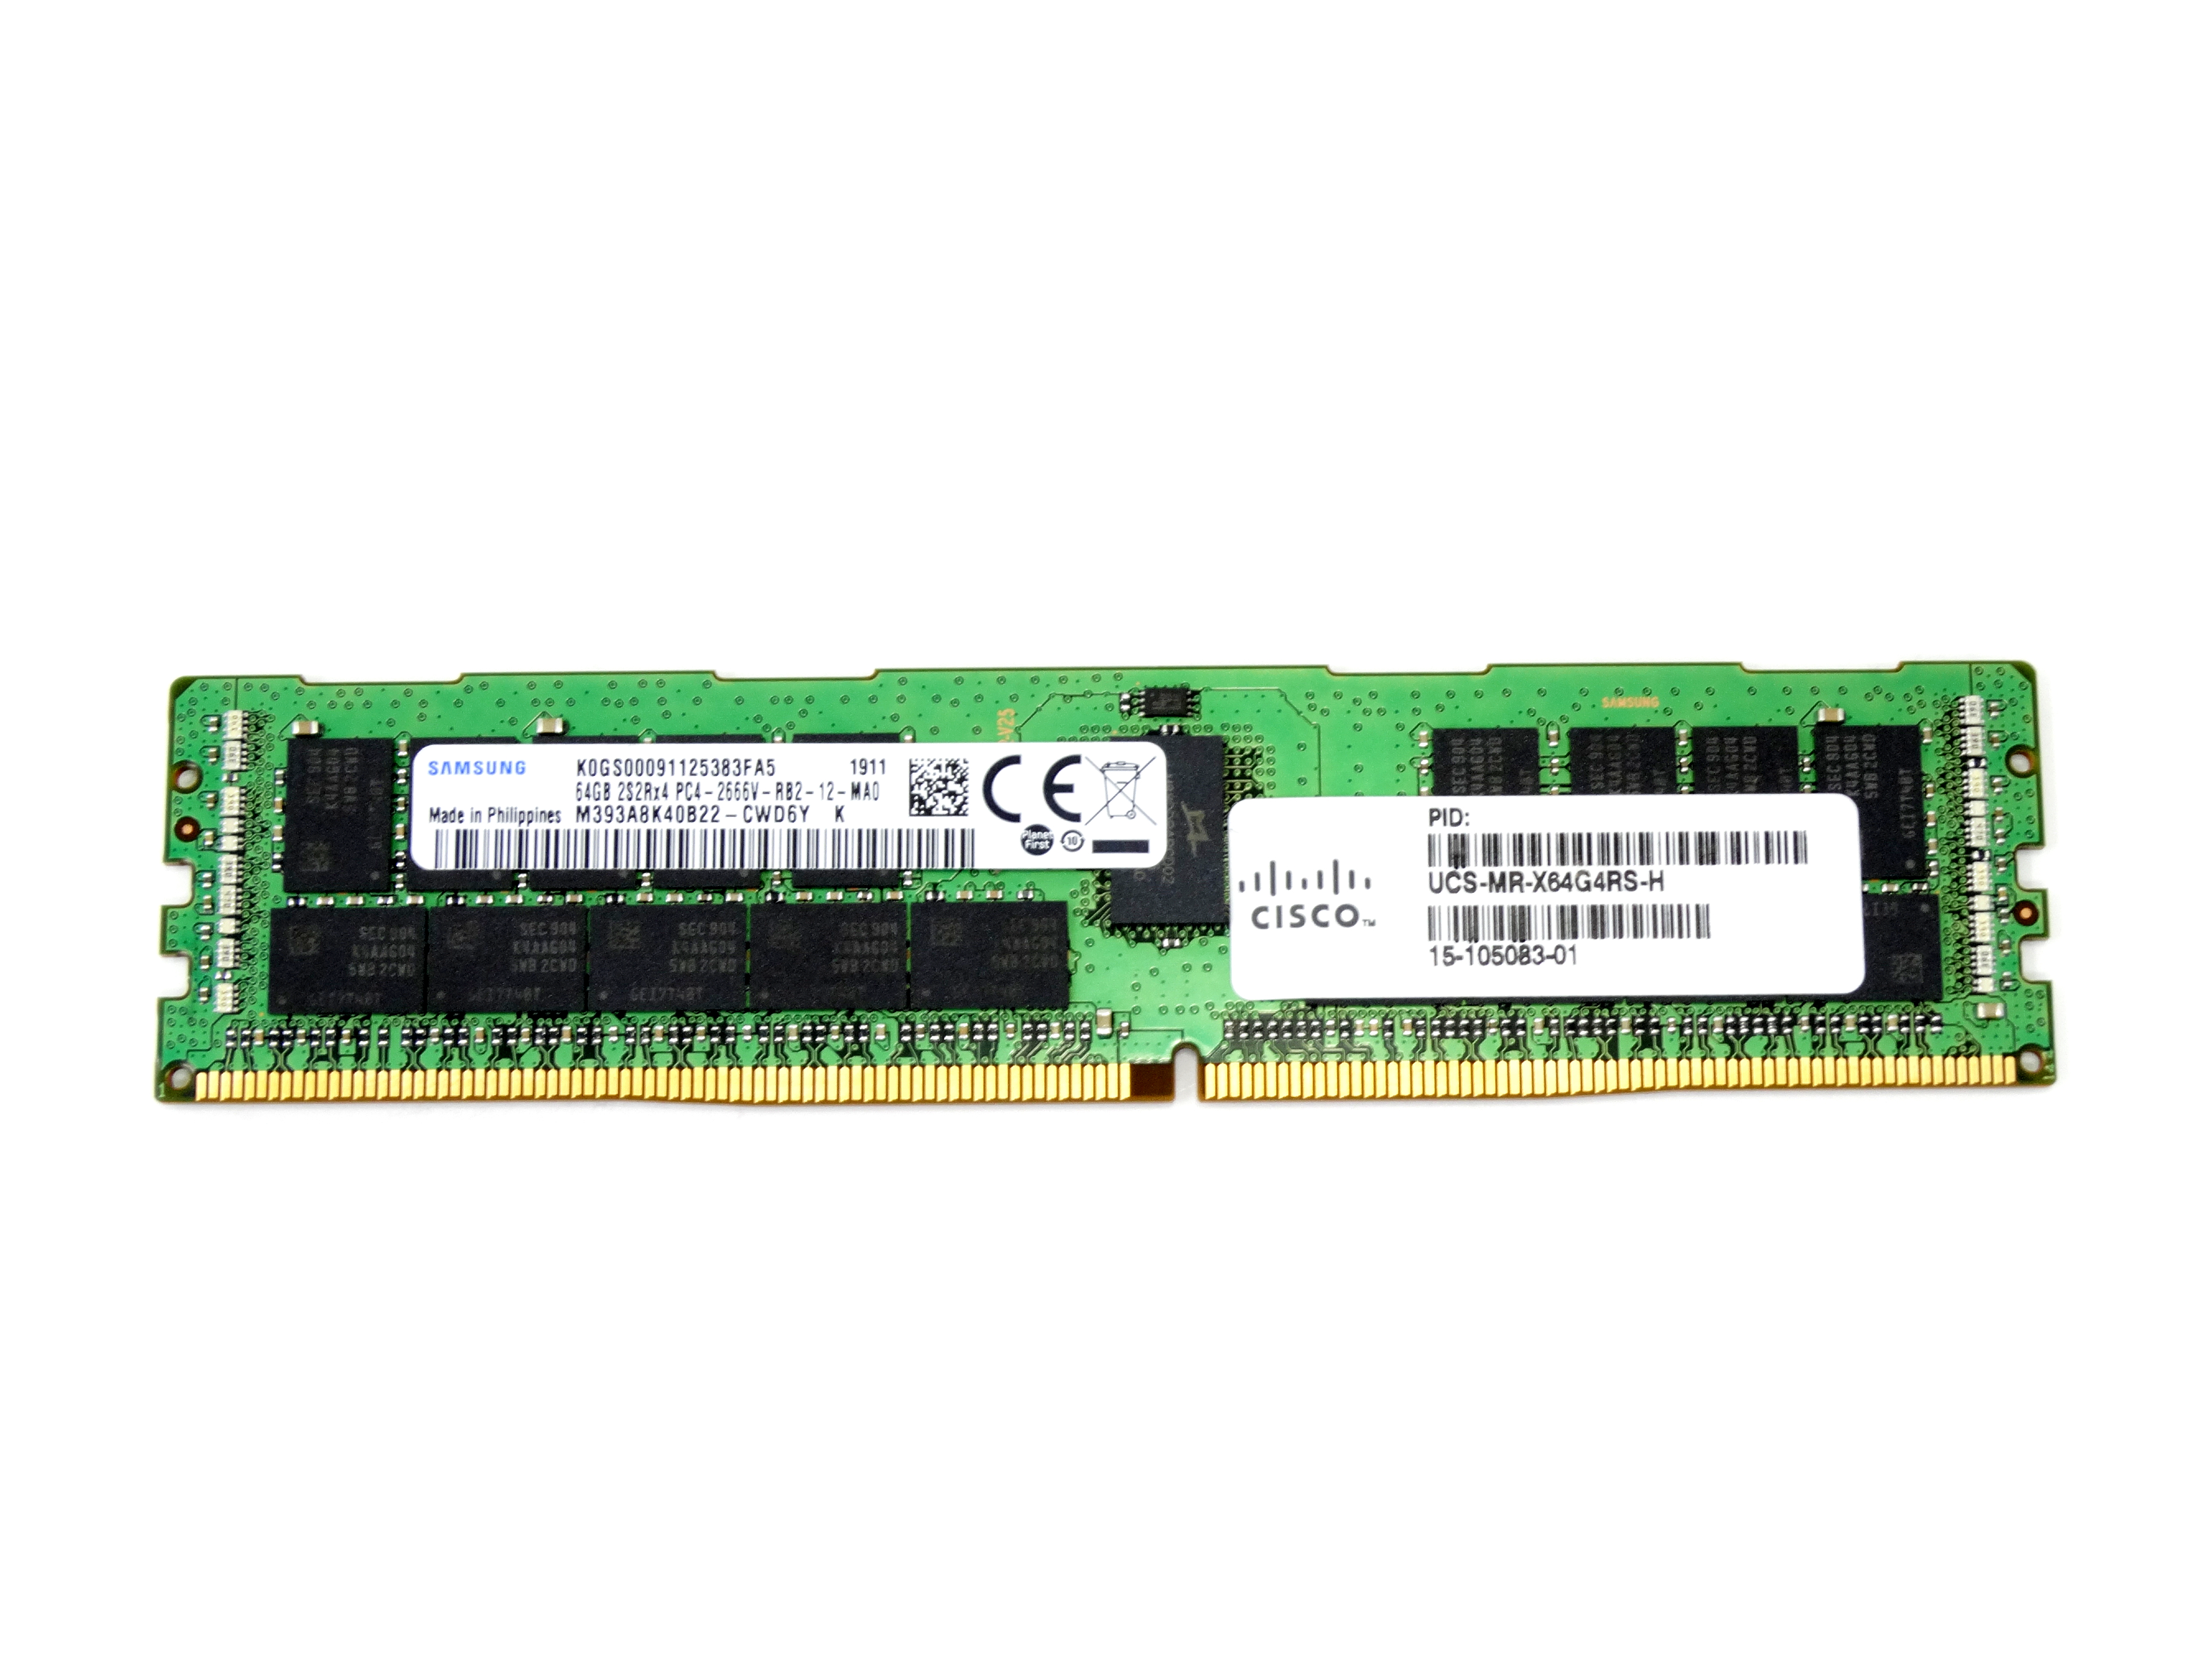 Cisco 64GB 2S2Rx4 PC4-2666V DDR4 ECC Registered SDRAM Quad Memory (M386A8K40BM2-CTD6Q-3rdParty)